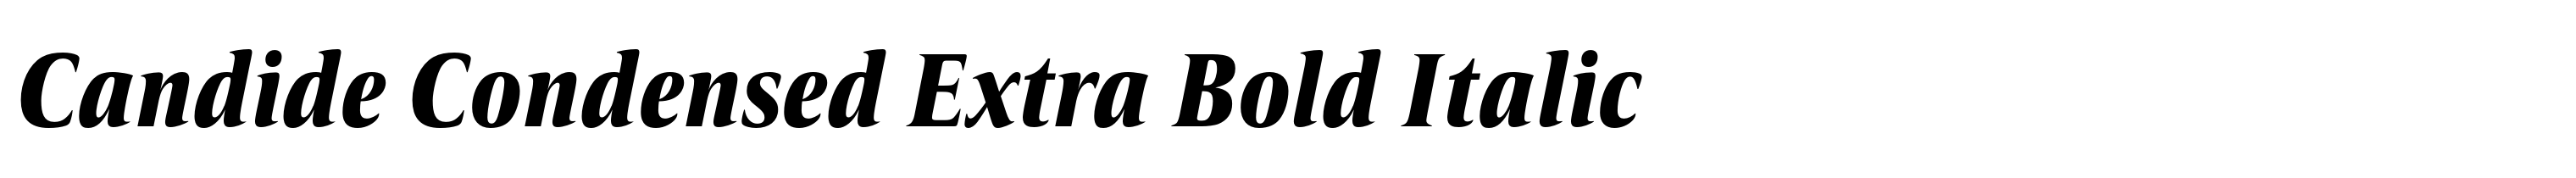 Candide Condensed Extra Bold Italic